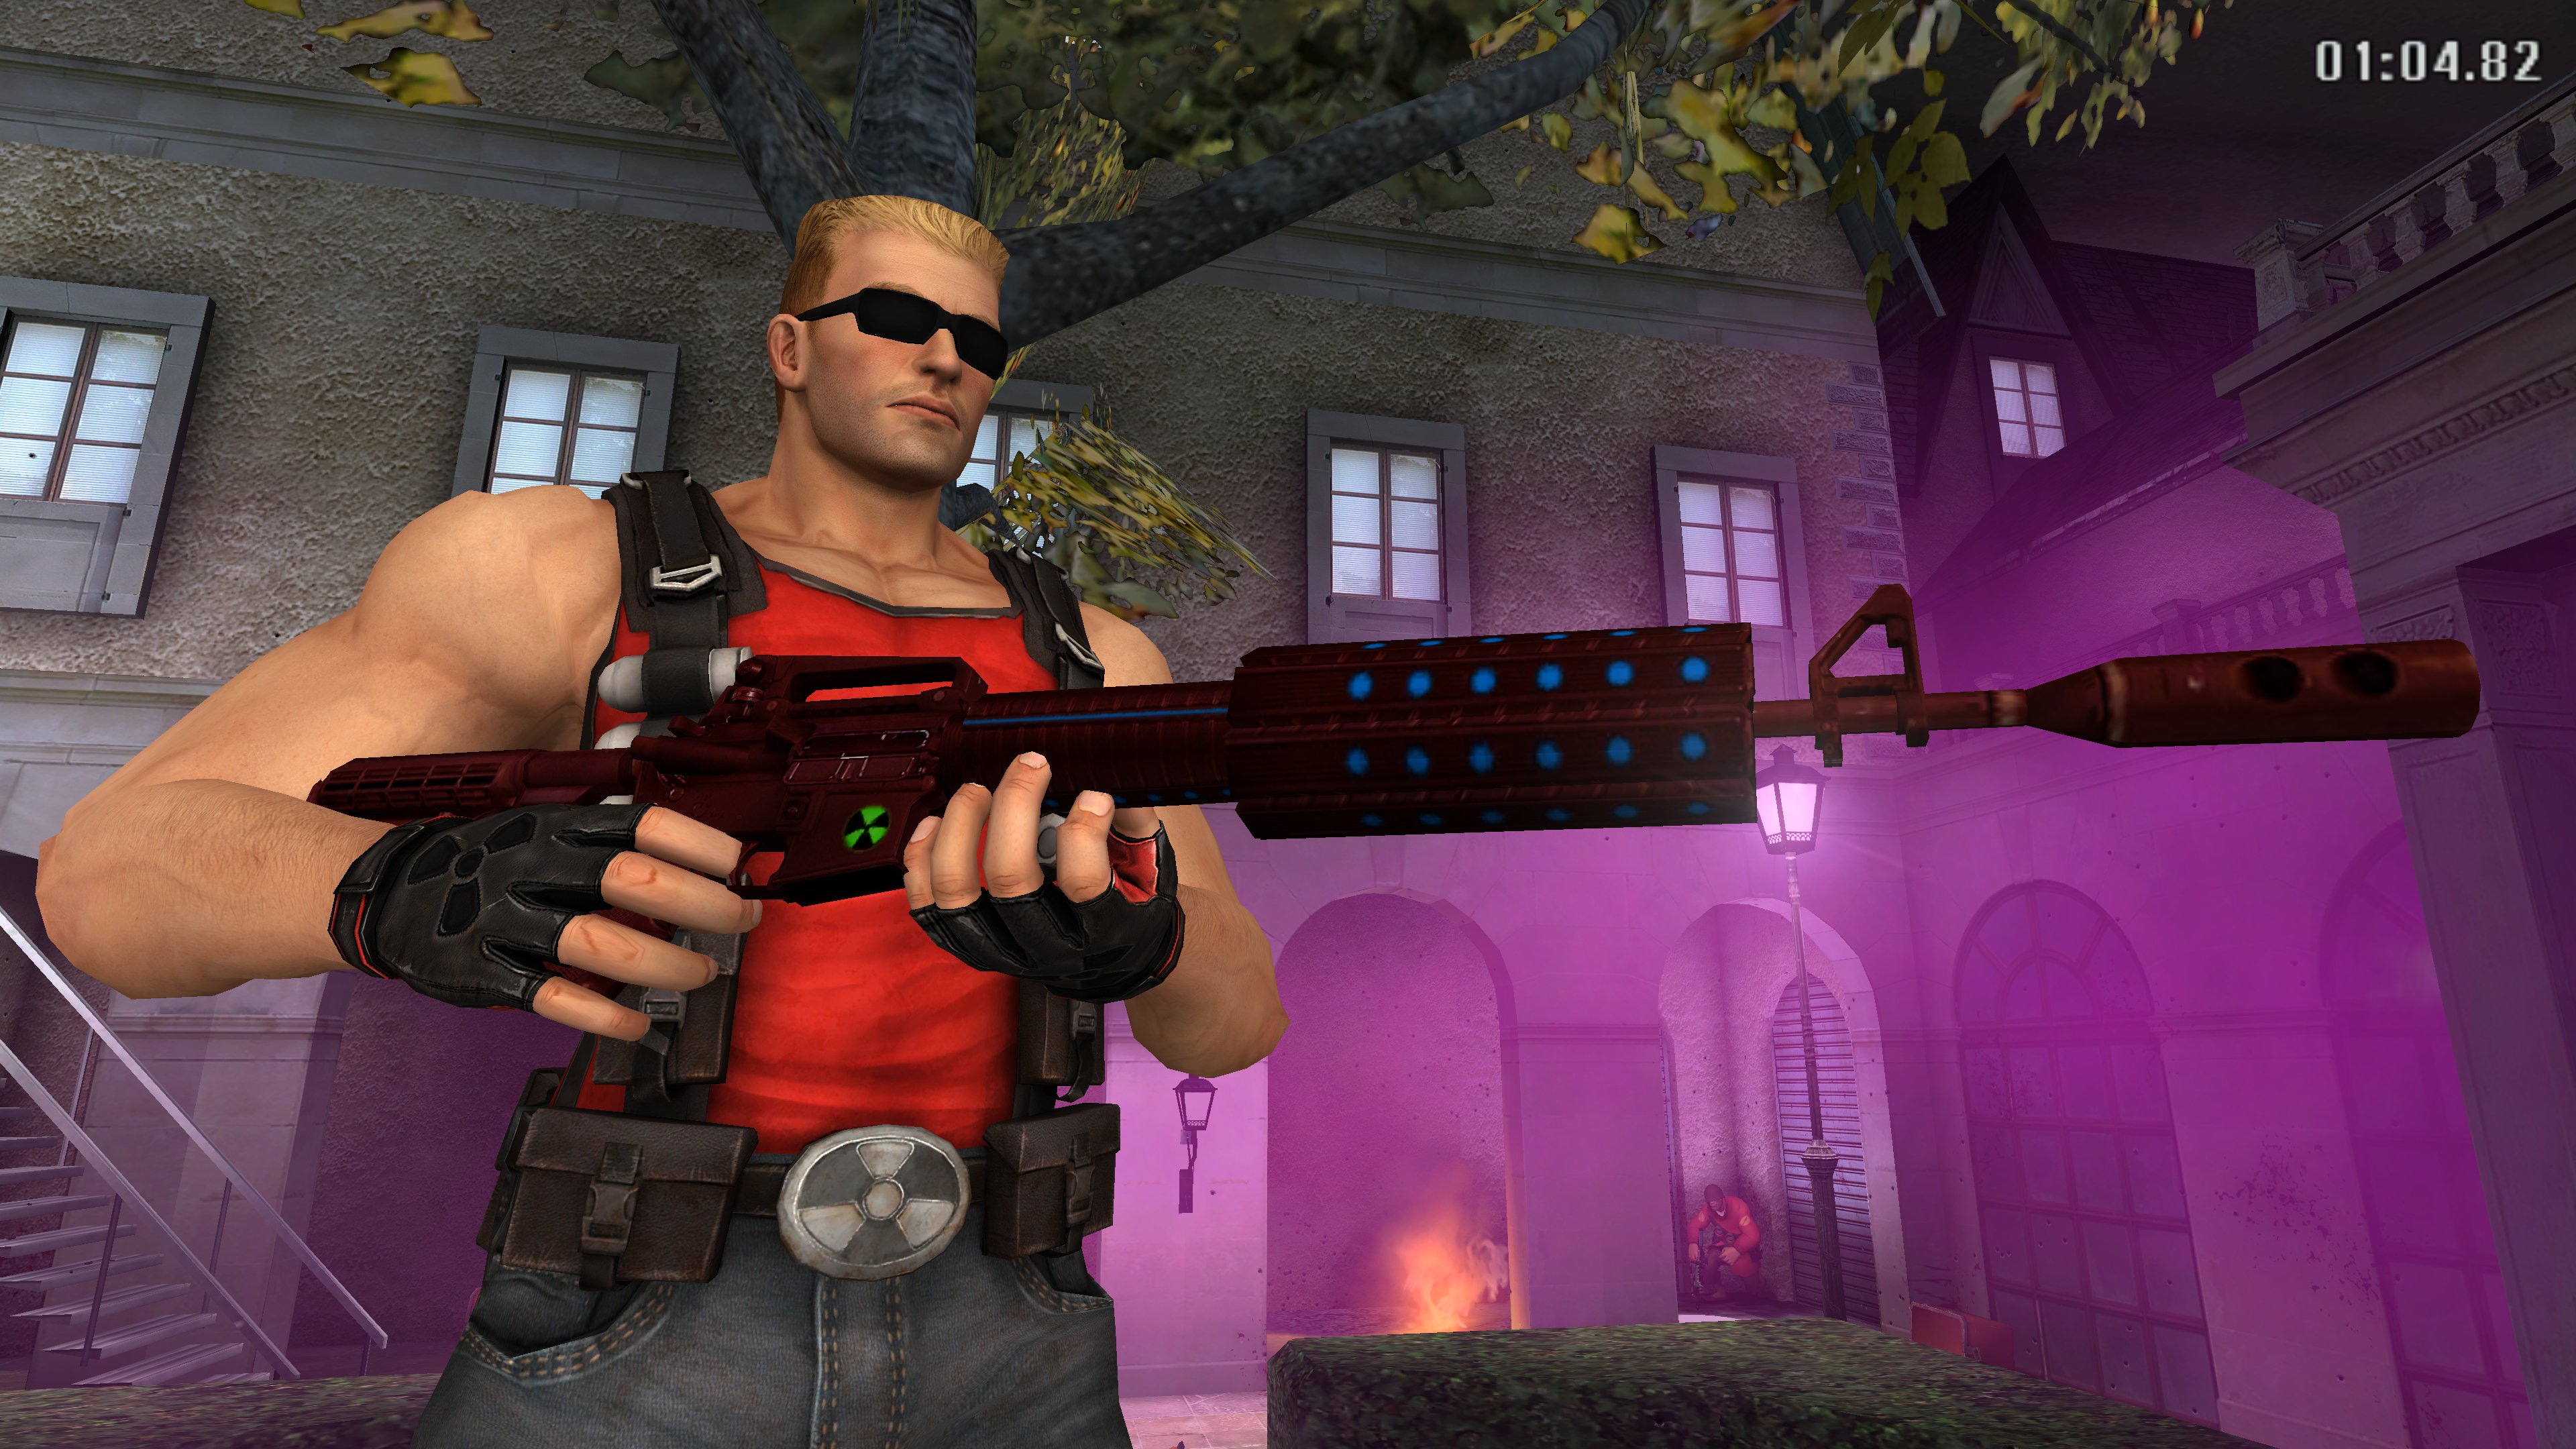 Steam Workshop::[WOTC] Max Payne Squadmate